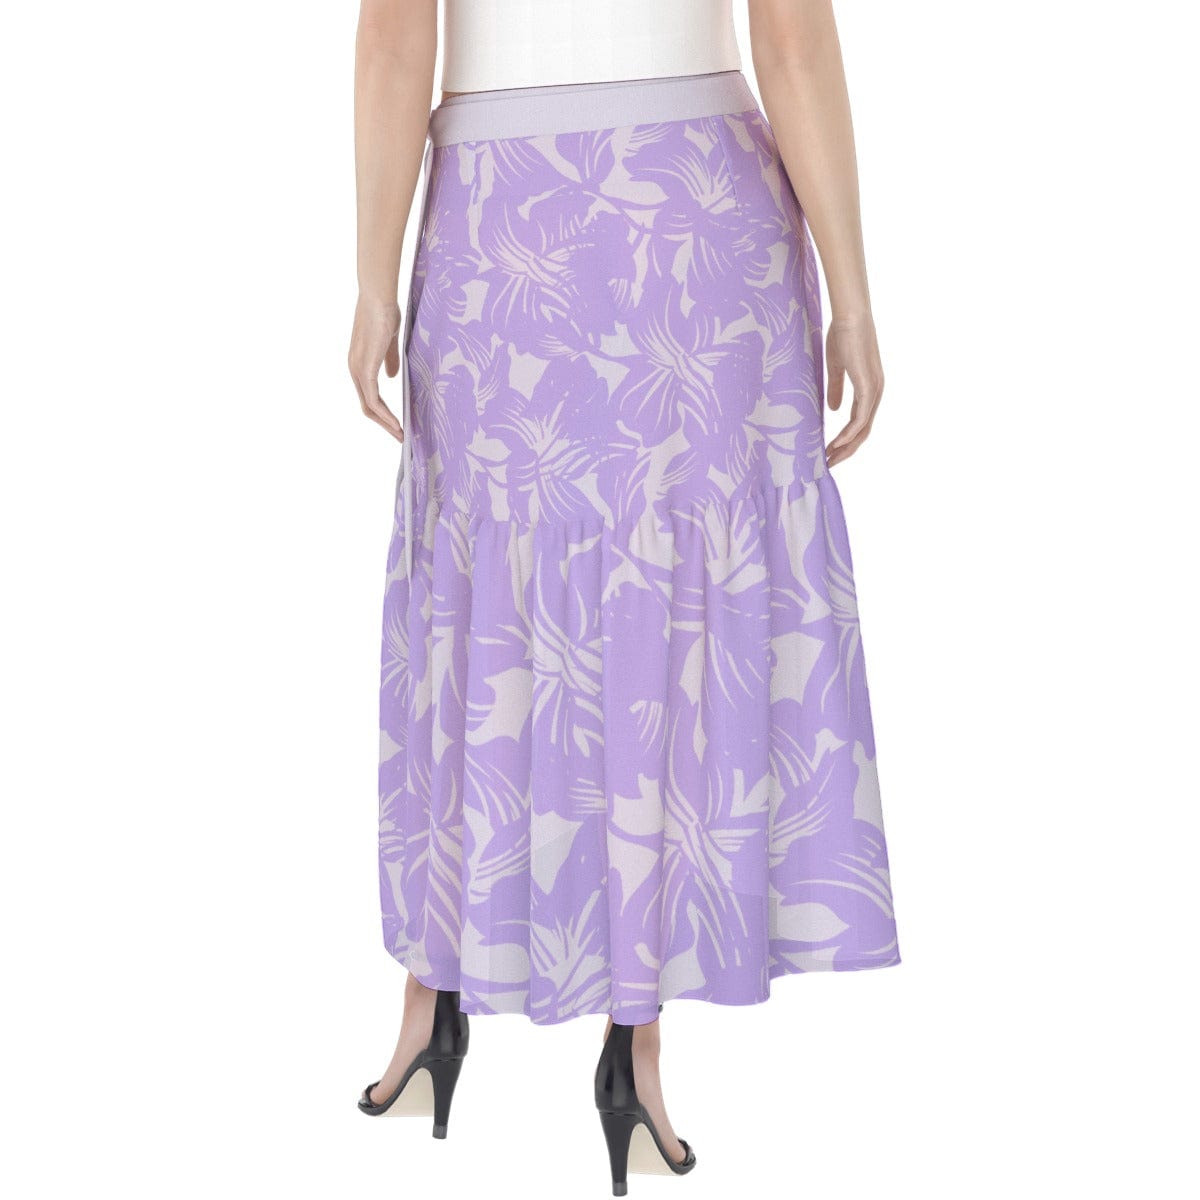 Yoycol Skirt 2XL / Lavender Hawaiian Lavender - Women's Wrap Skirt